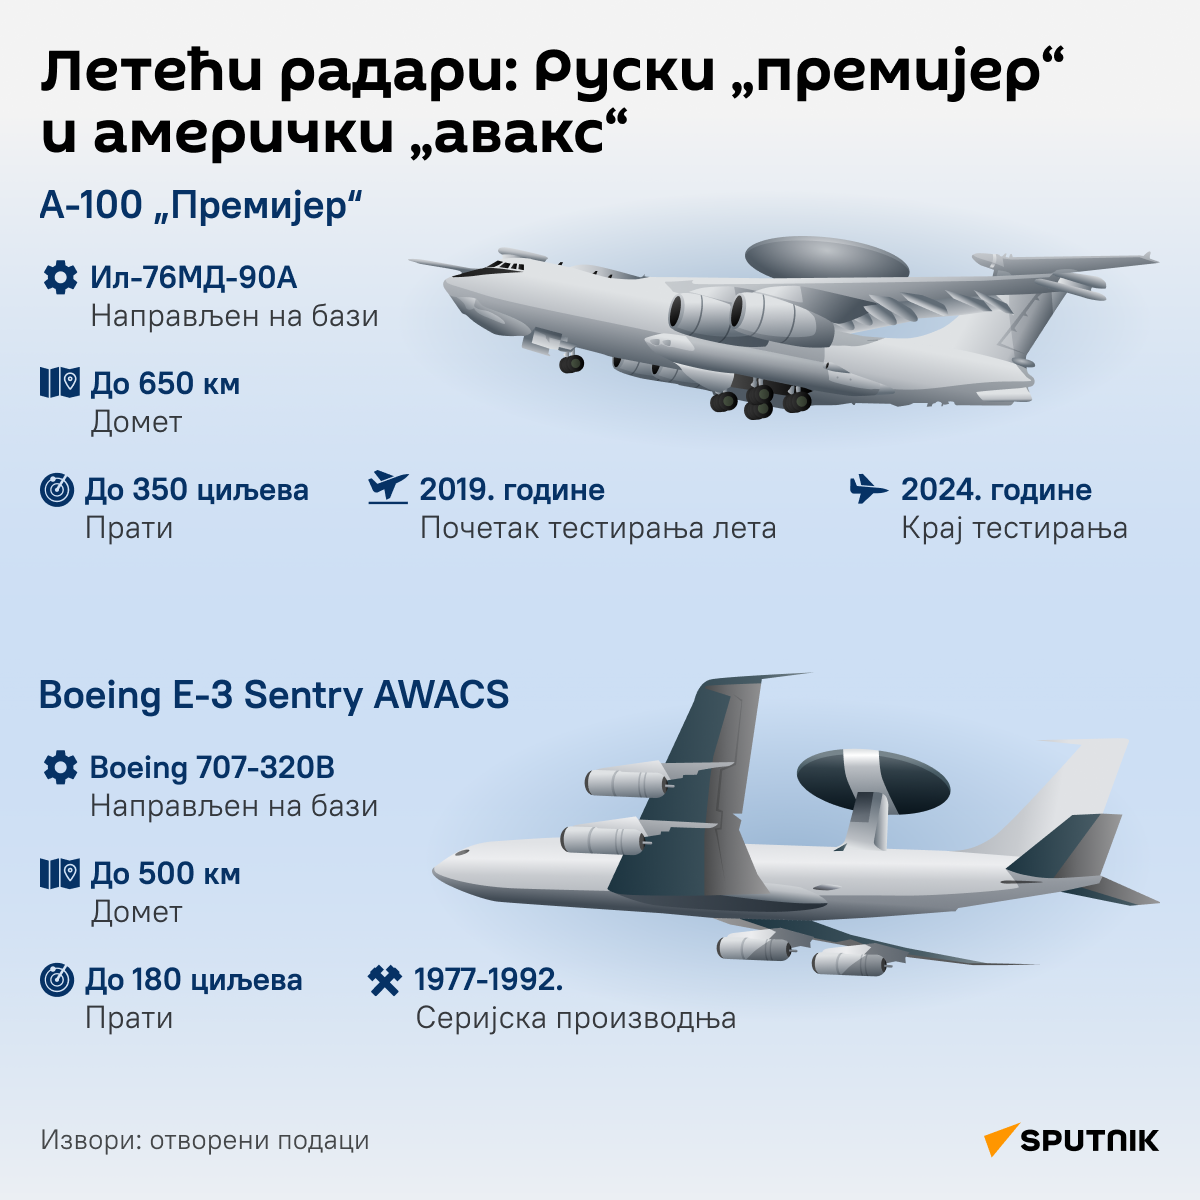 Инфографика Летећи радари: Руски „премијер“ и амерички „авакс“ ЋИР деск - Sputnik Србија